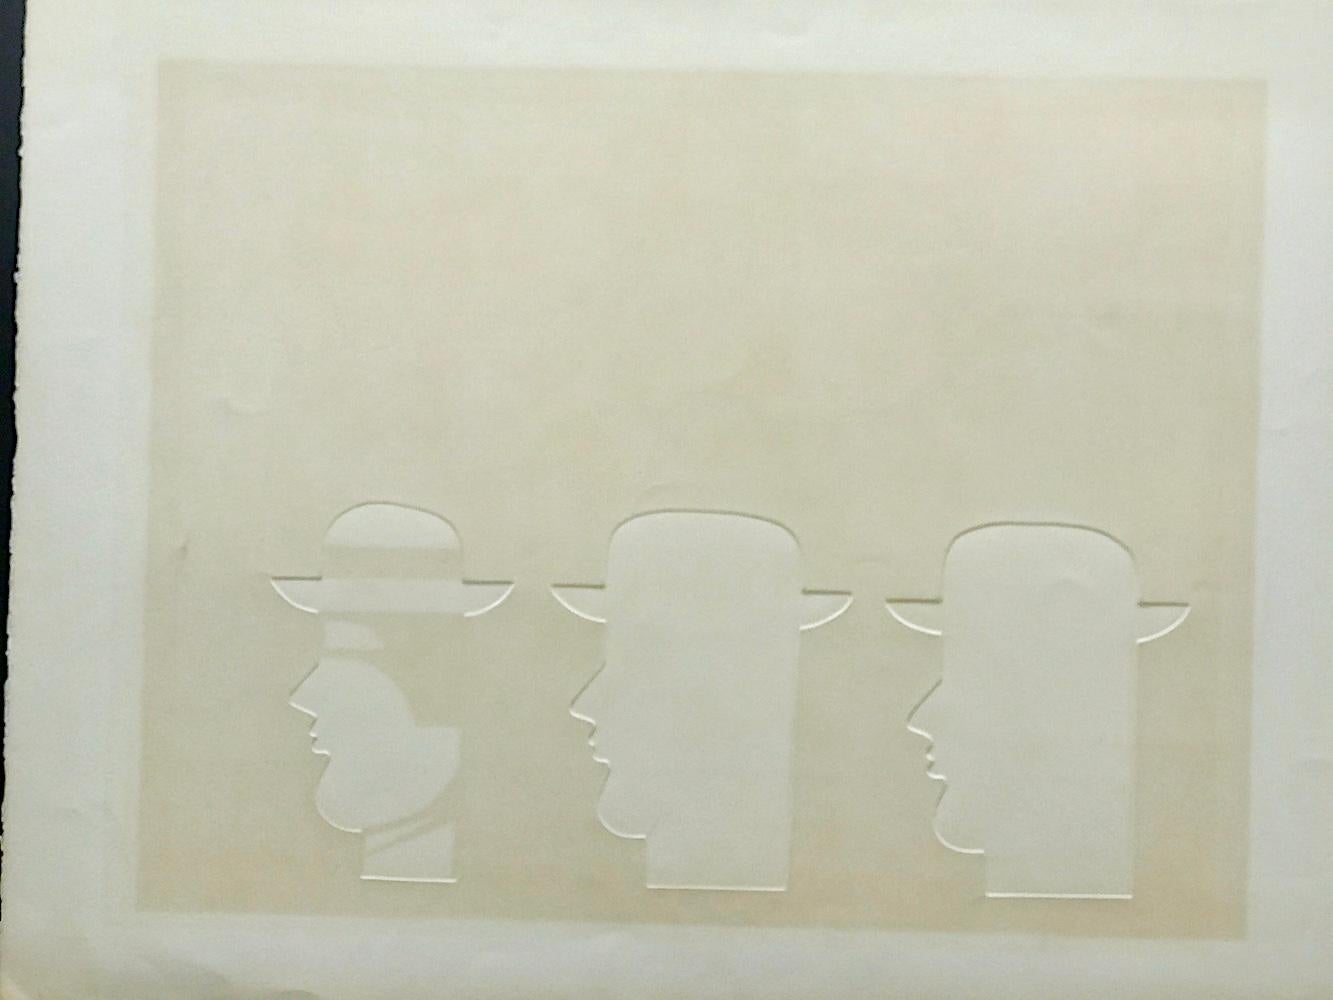 SIX MEN Signed Embossed Lithograph, Men In Hats, Greek Modernist Portrait - Contemporary Print by Yannis Gaïtis